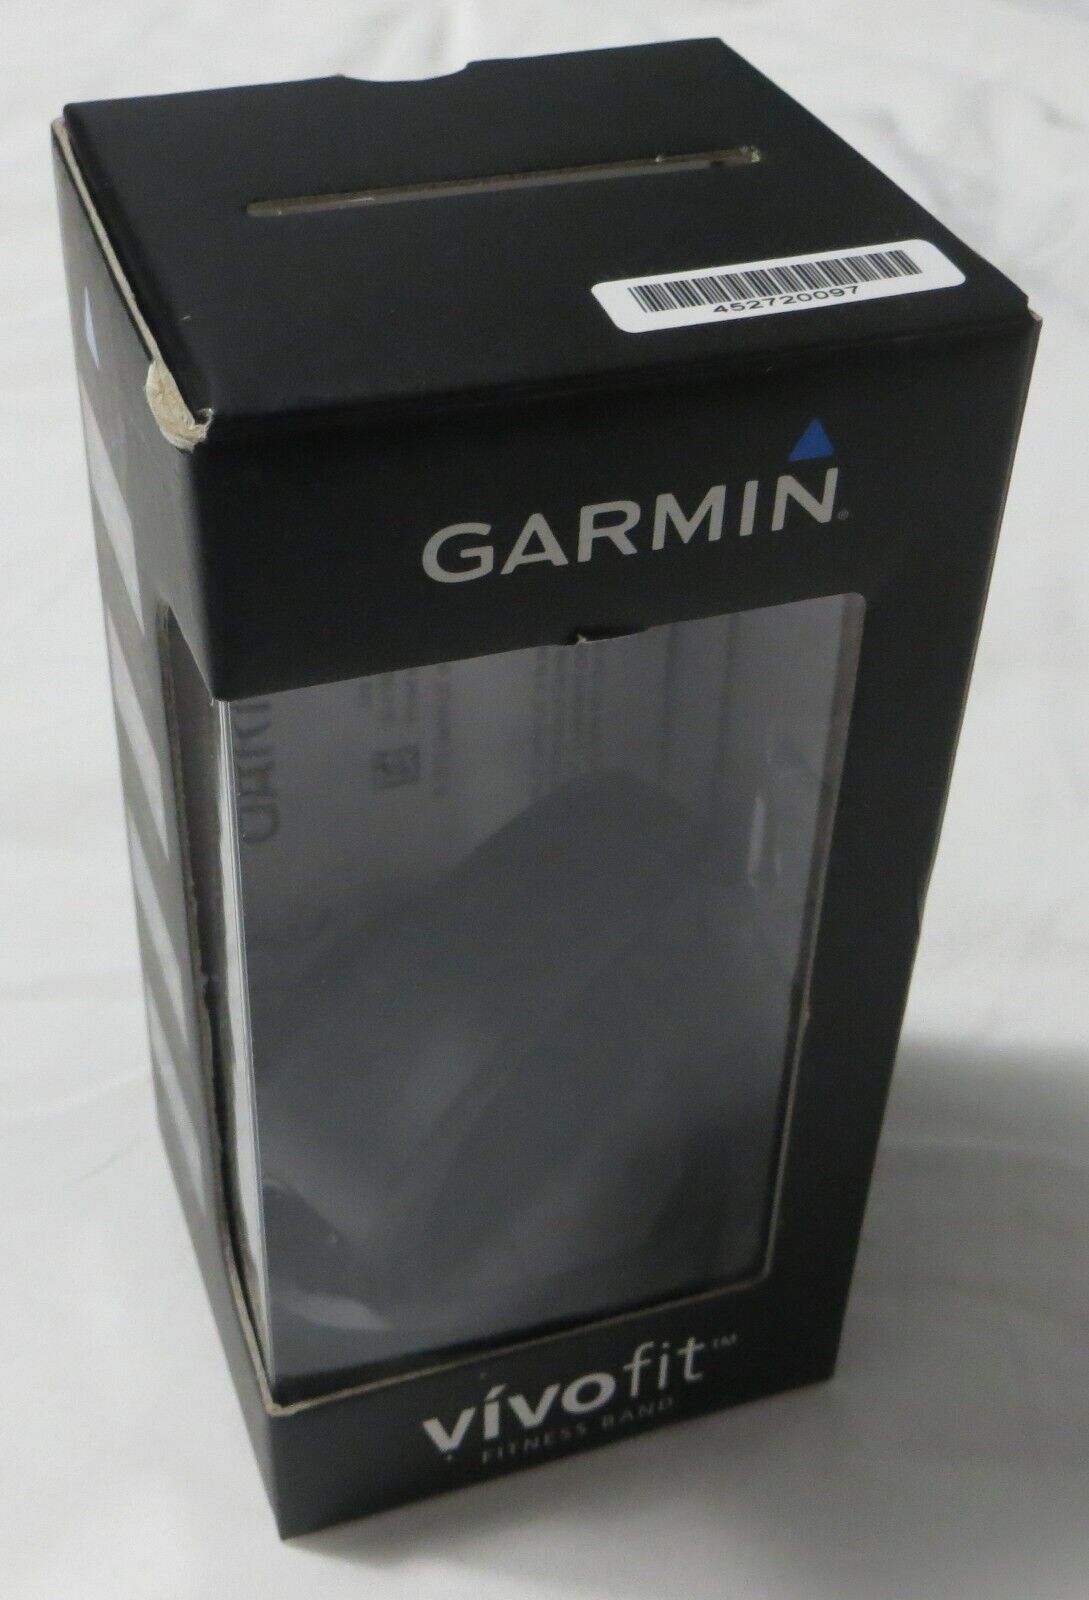 Garmin VivoFit Fitness Band Size S with Unused Extra Band Size L - Black Garmin 010-01225-00